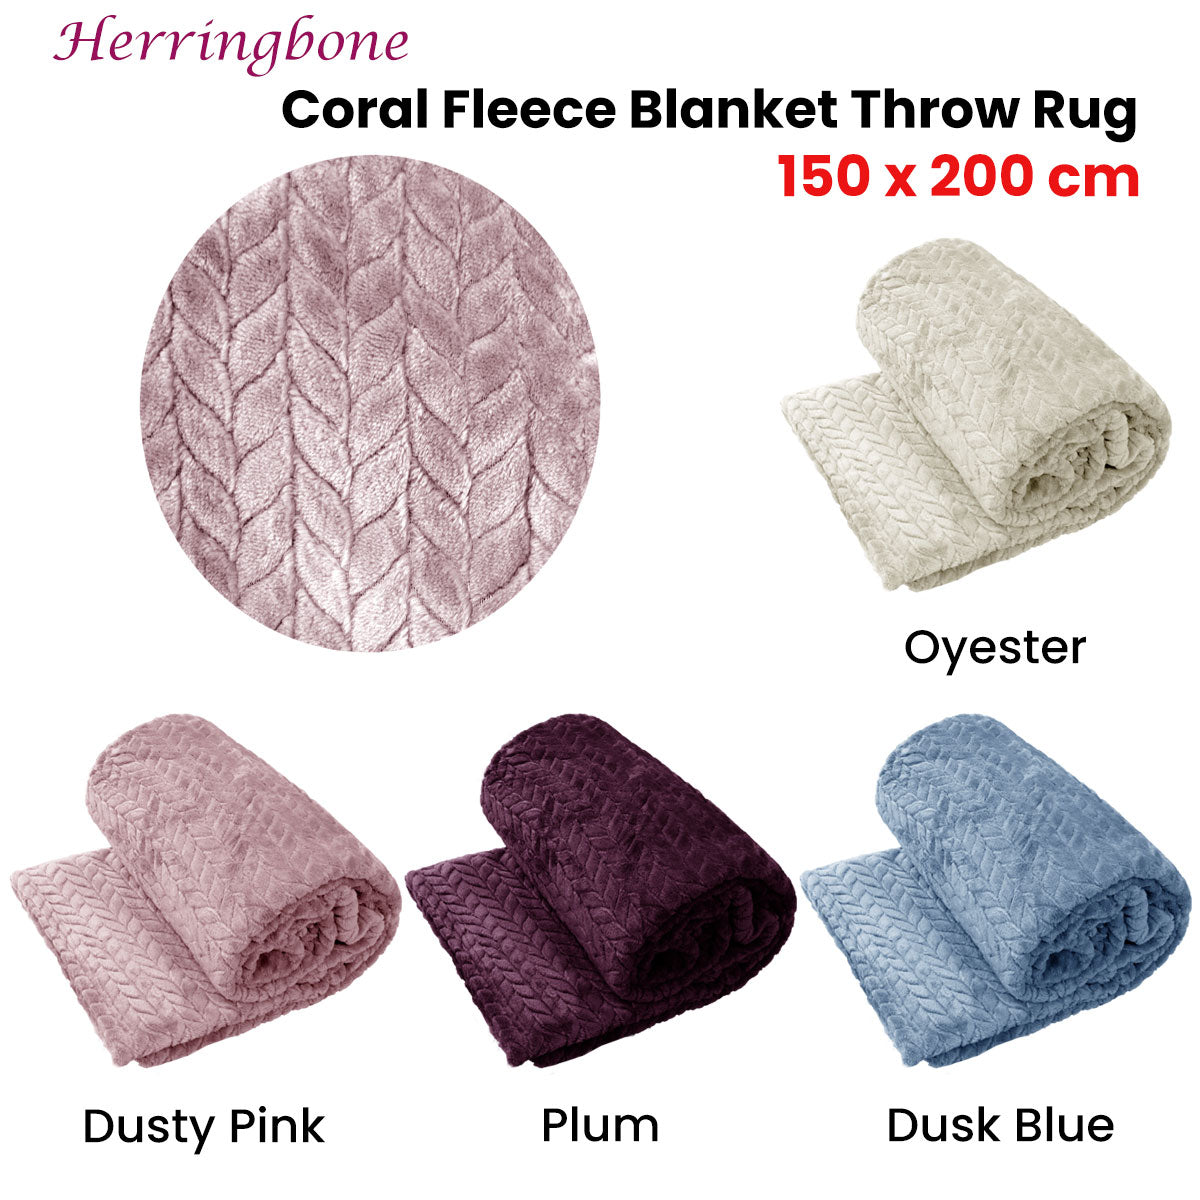 Herringbone Coral Fleece Blanket Throw Rug 150x200 cm Dusty Pink